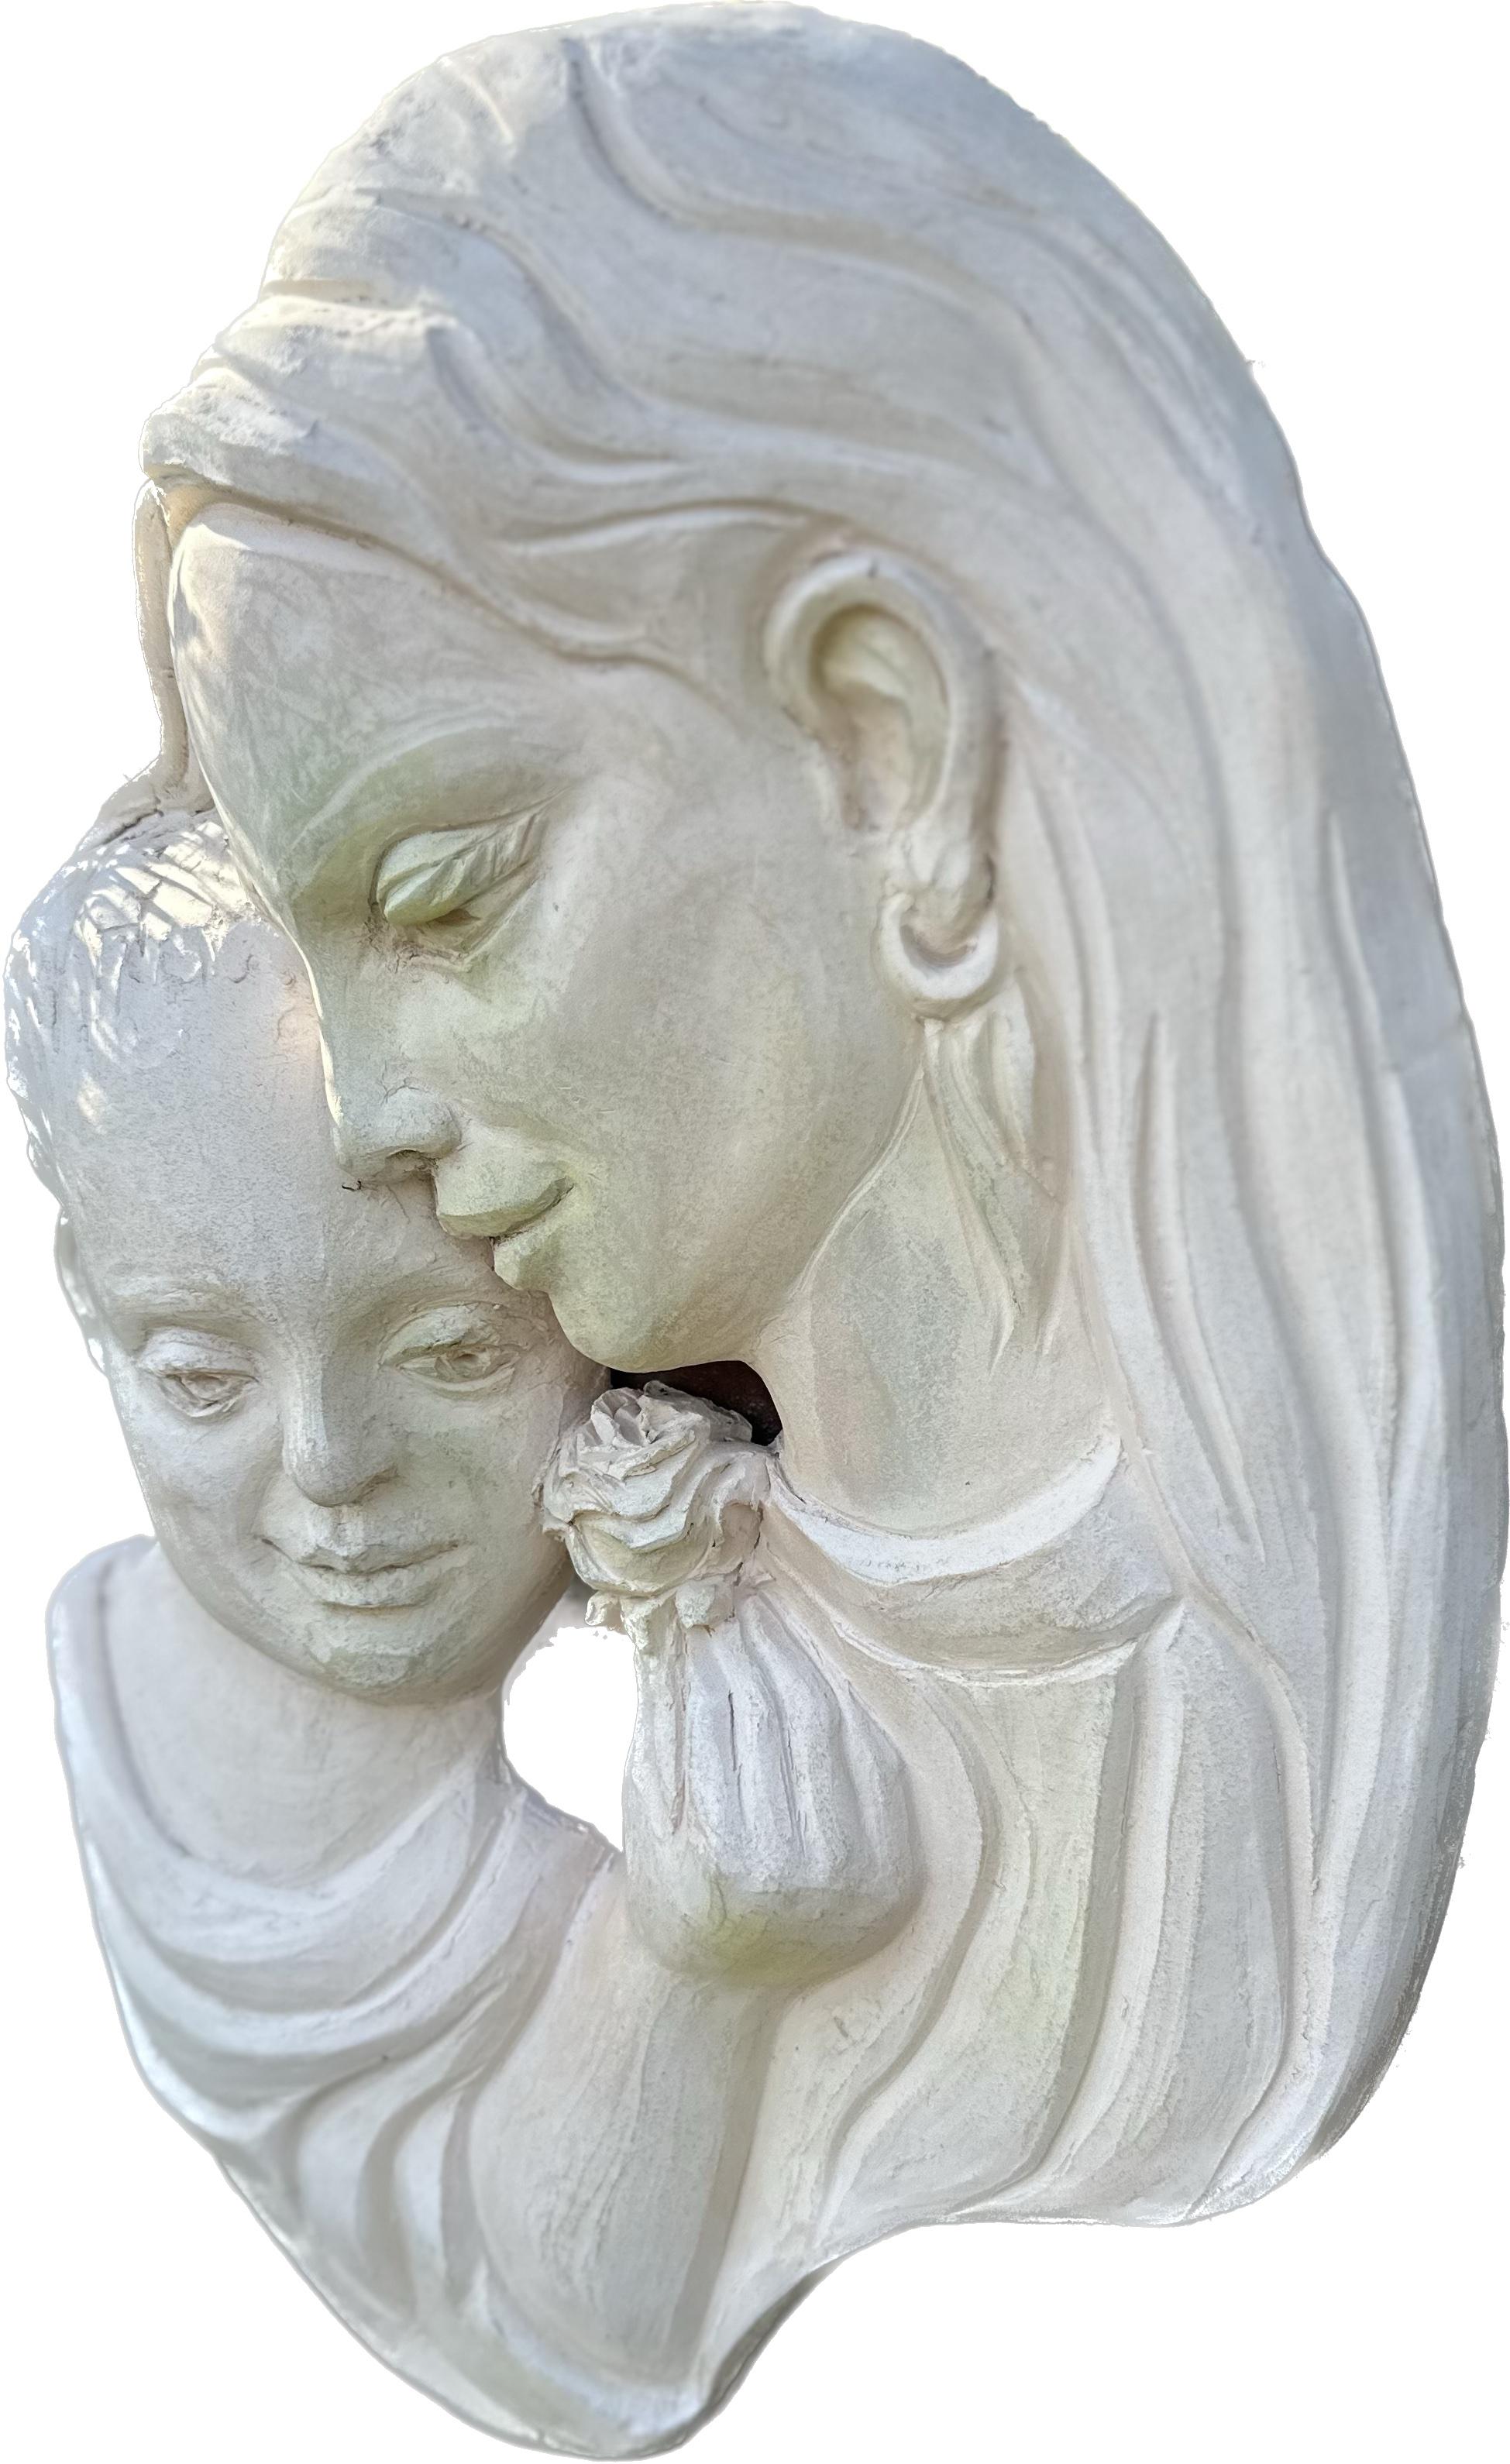 Artist:  (Garo) Karapet Balakeseryan  
Medium: Ceramic, Clay, Handmade, One of a Kind 
Year: 2023
Style: Classic, Impressionism, 
Subject: Motherhood,
Size: 23